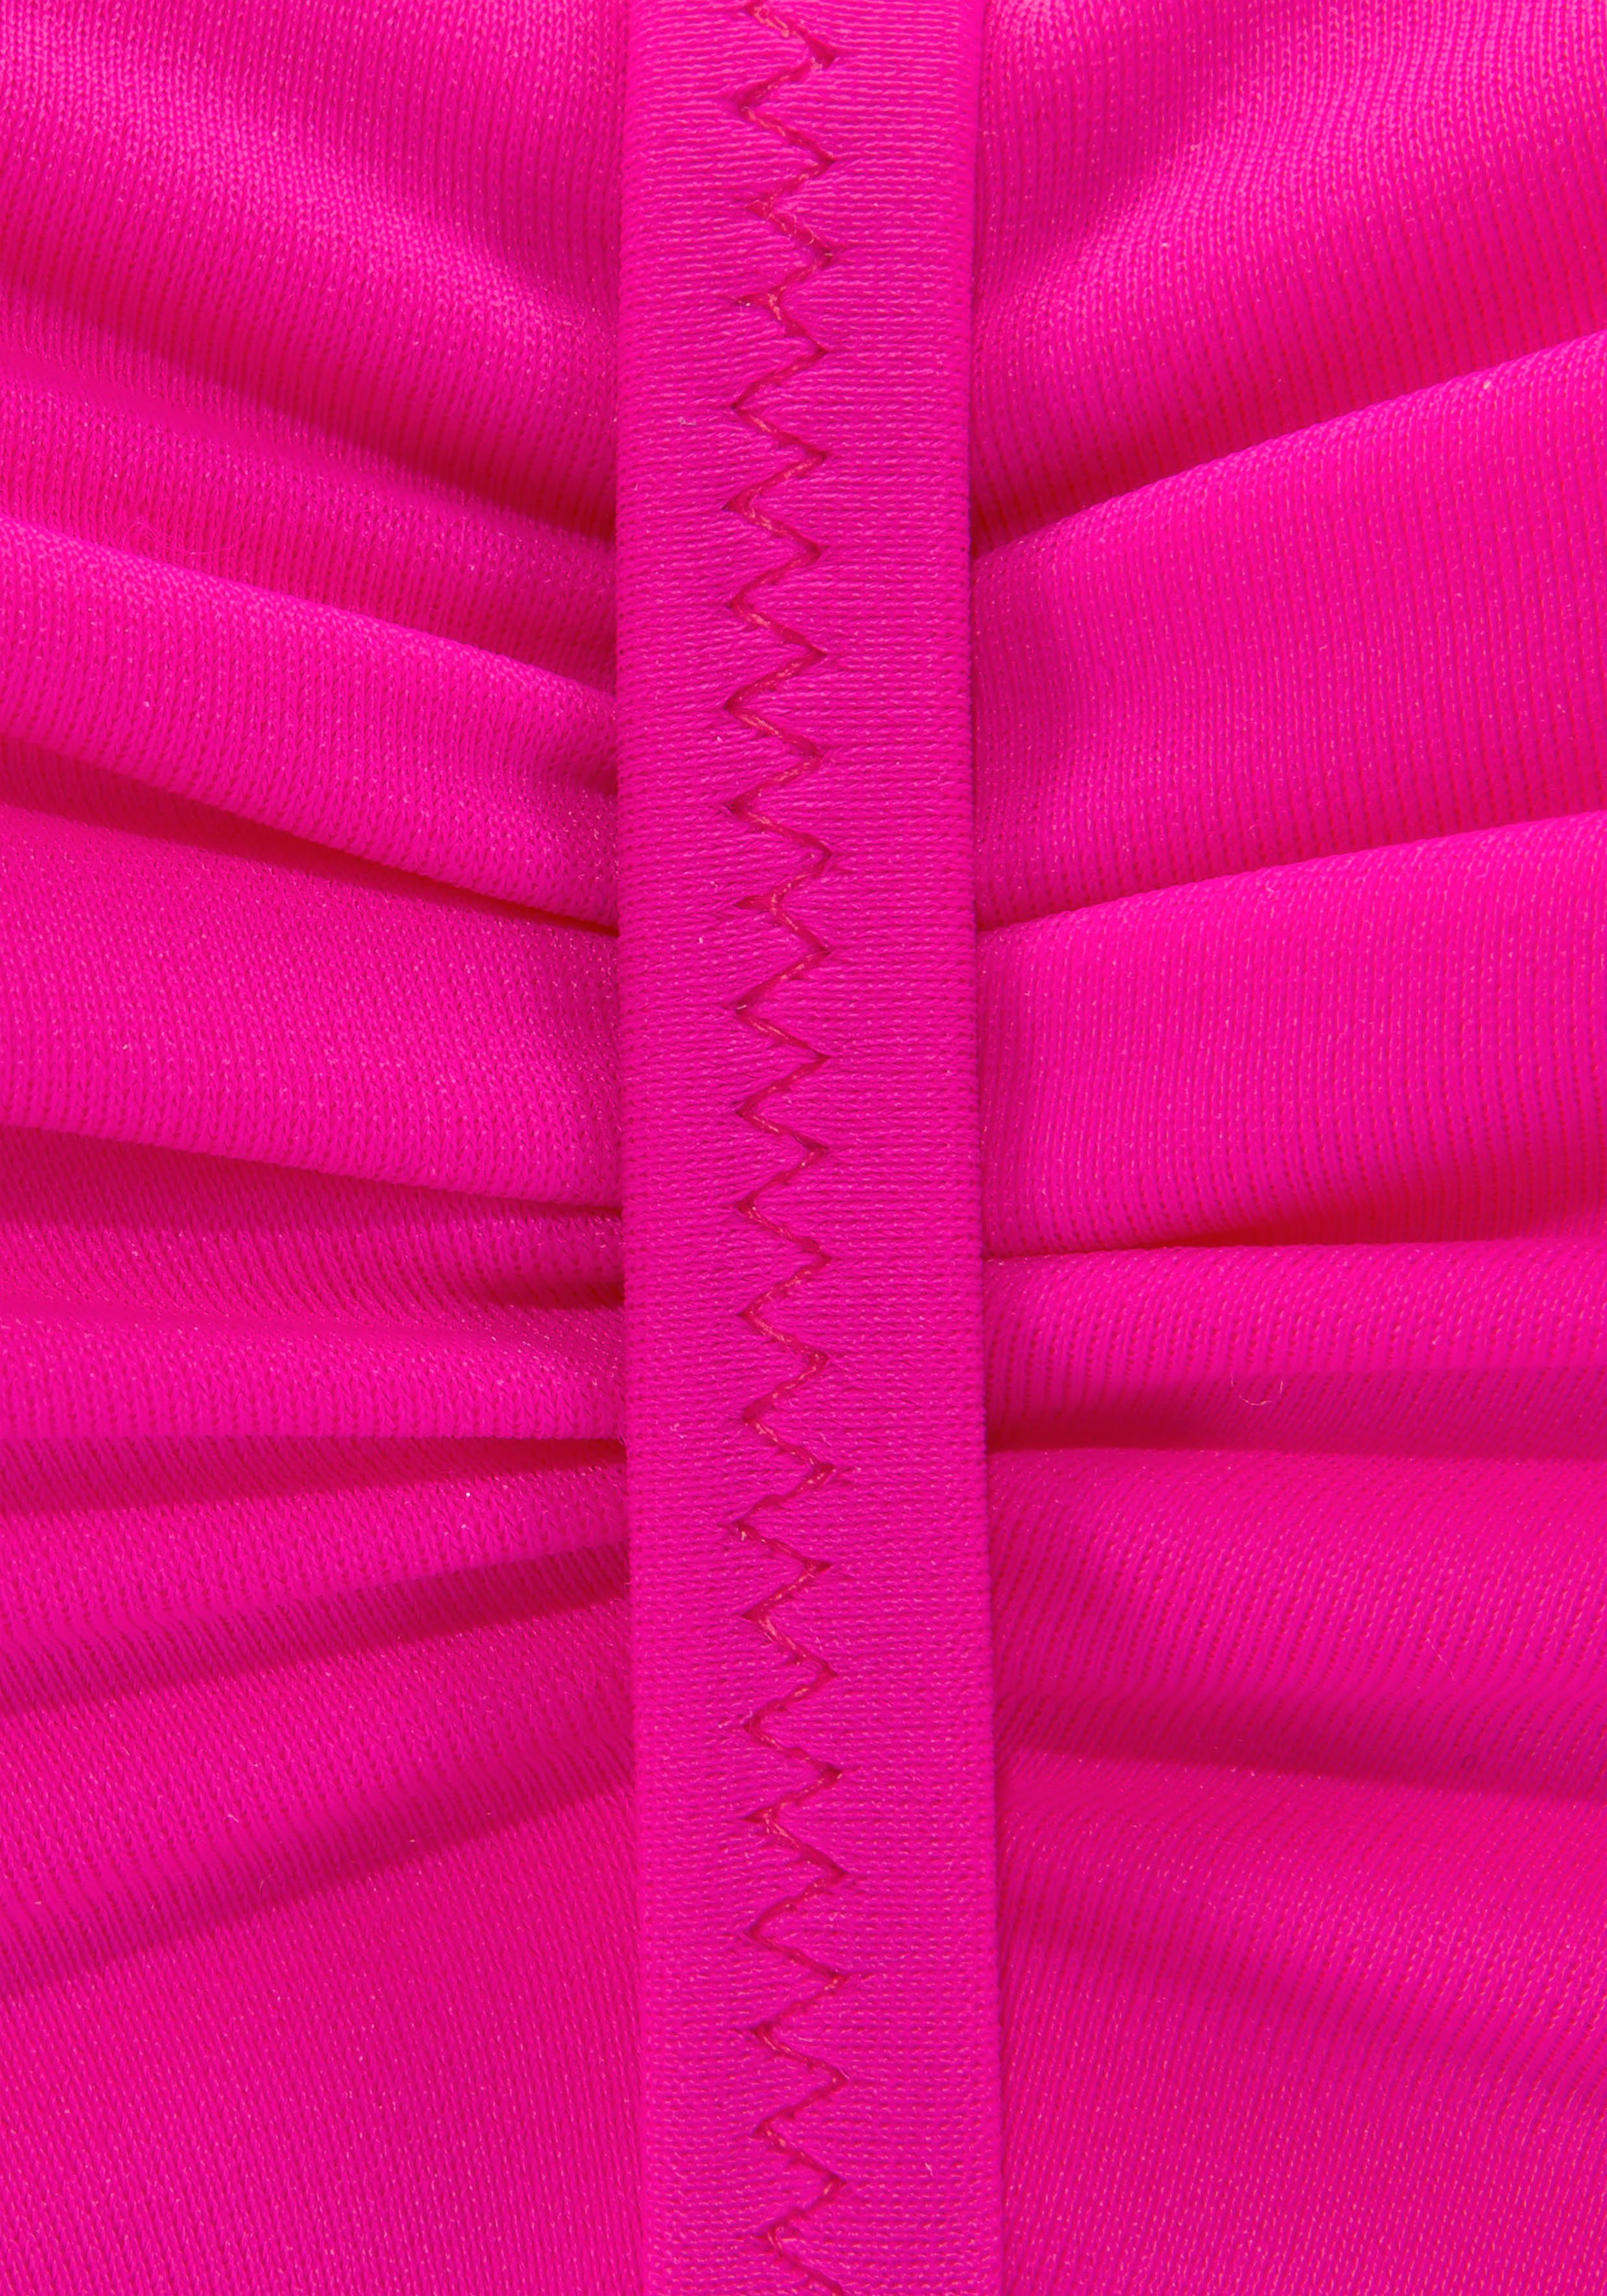 in trendiger Vivance Unifarbe pink Bügel-Bandeau-Bikini